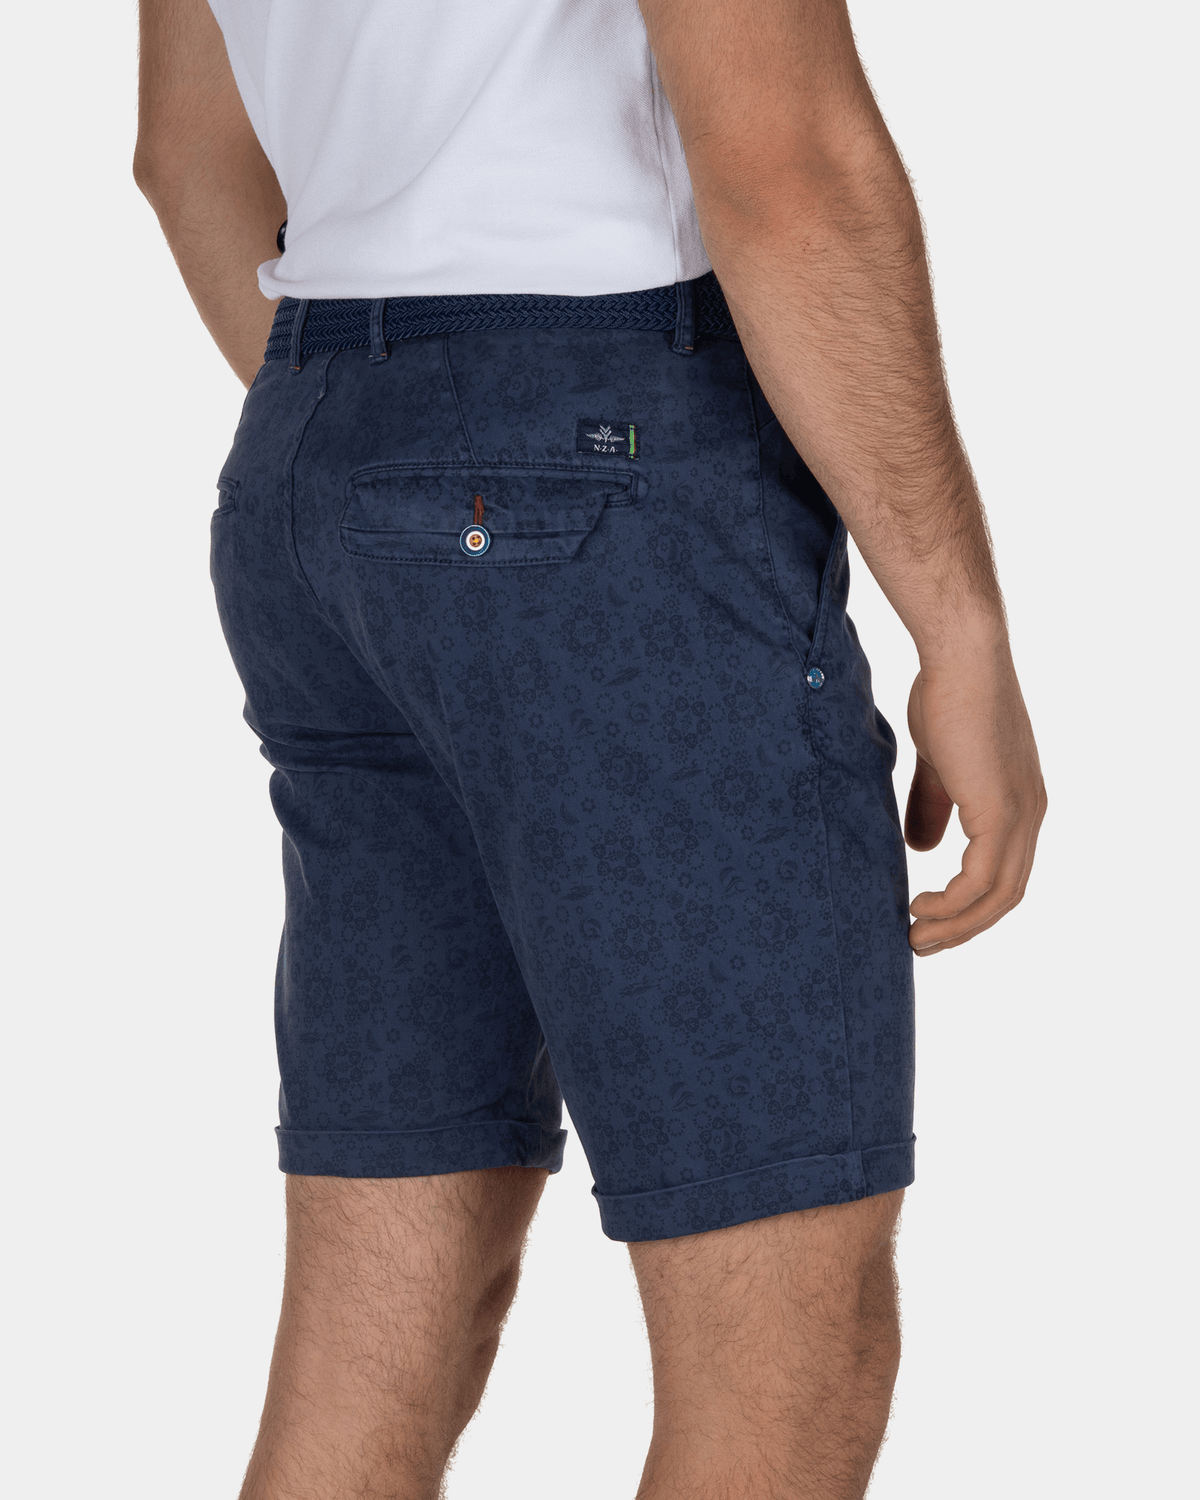 Shorts with print Plimmerton - Urban Navy